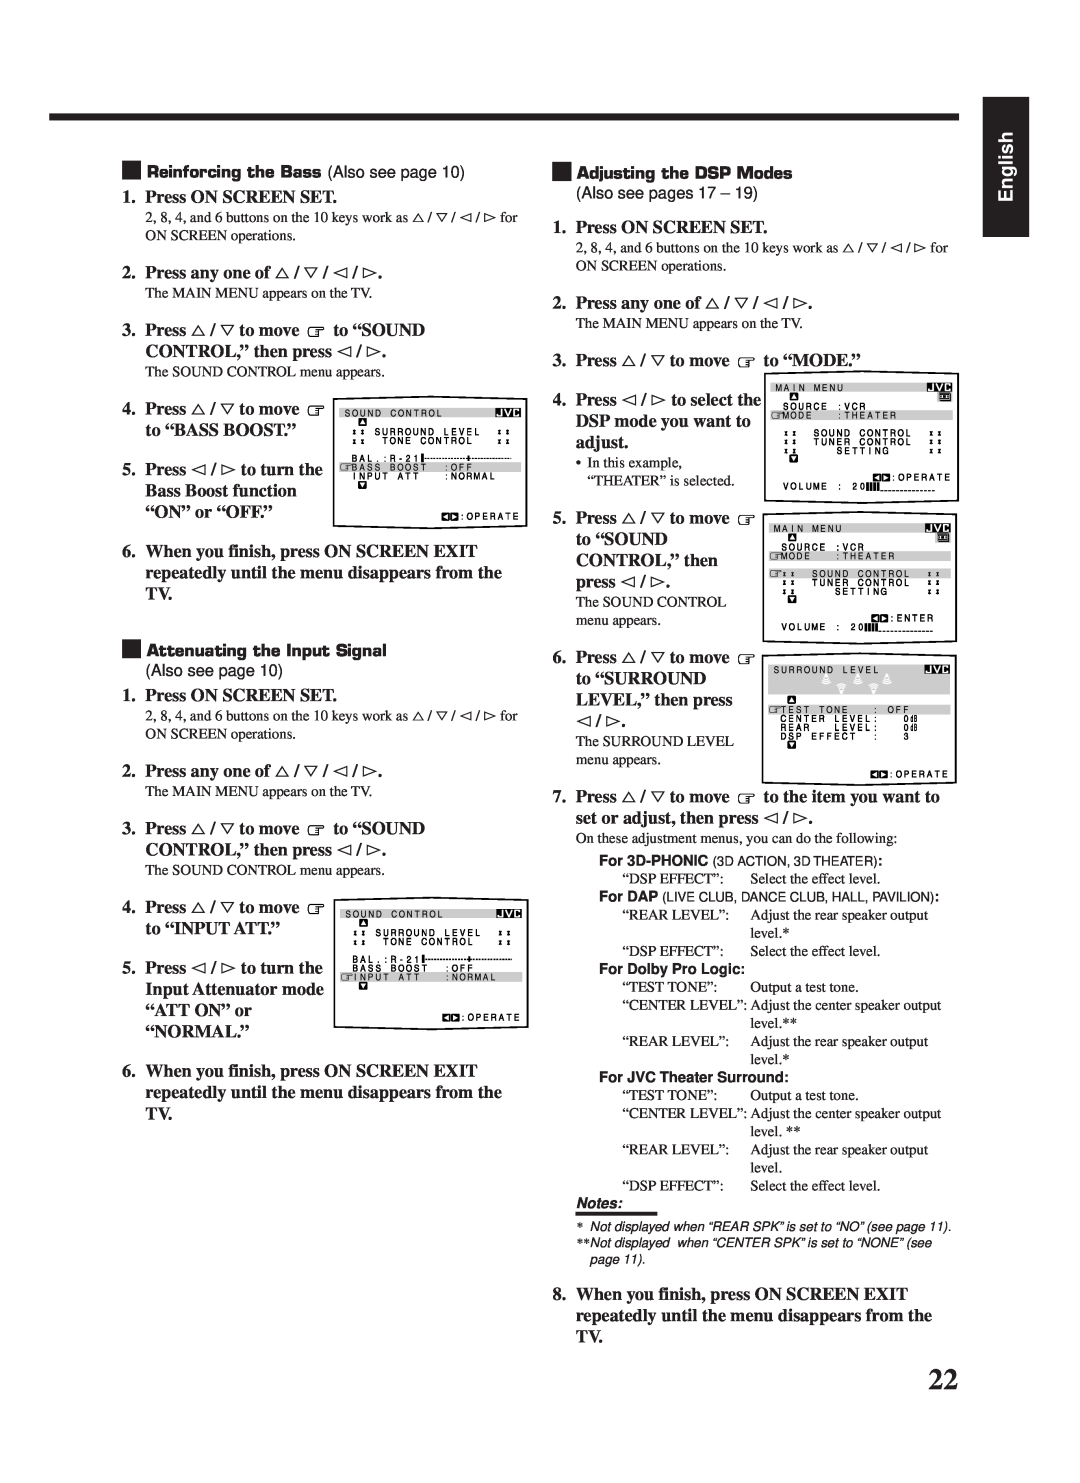 JVC RX-669PGD, LVT0142-006A manual English, Press ON SCREEN SET 